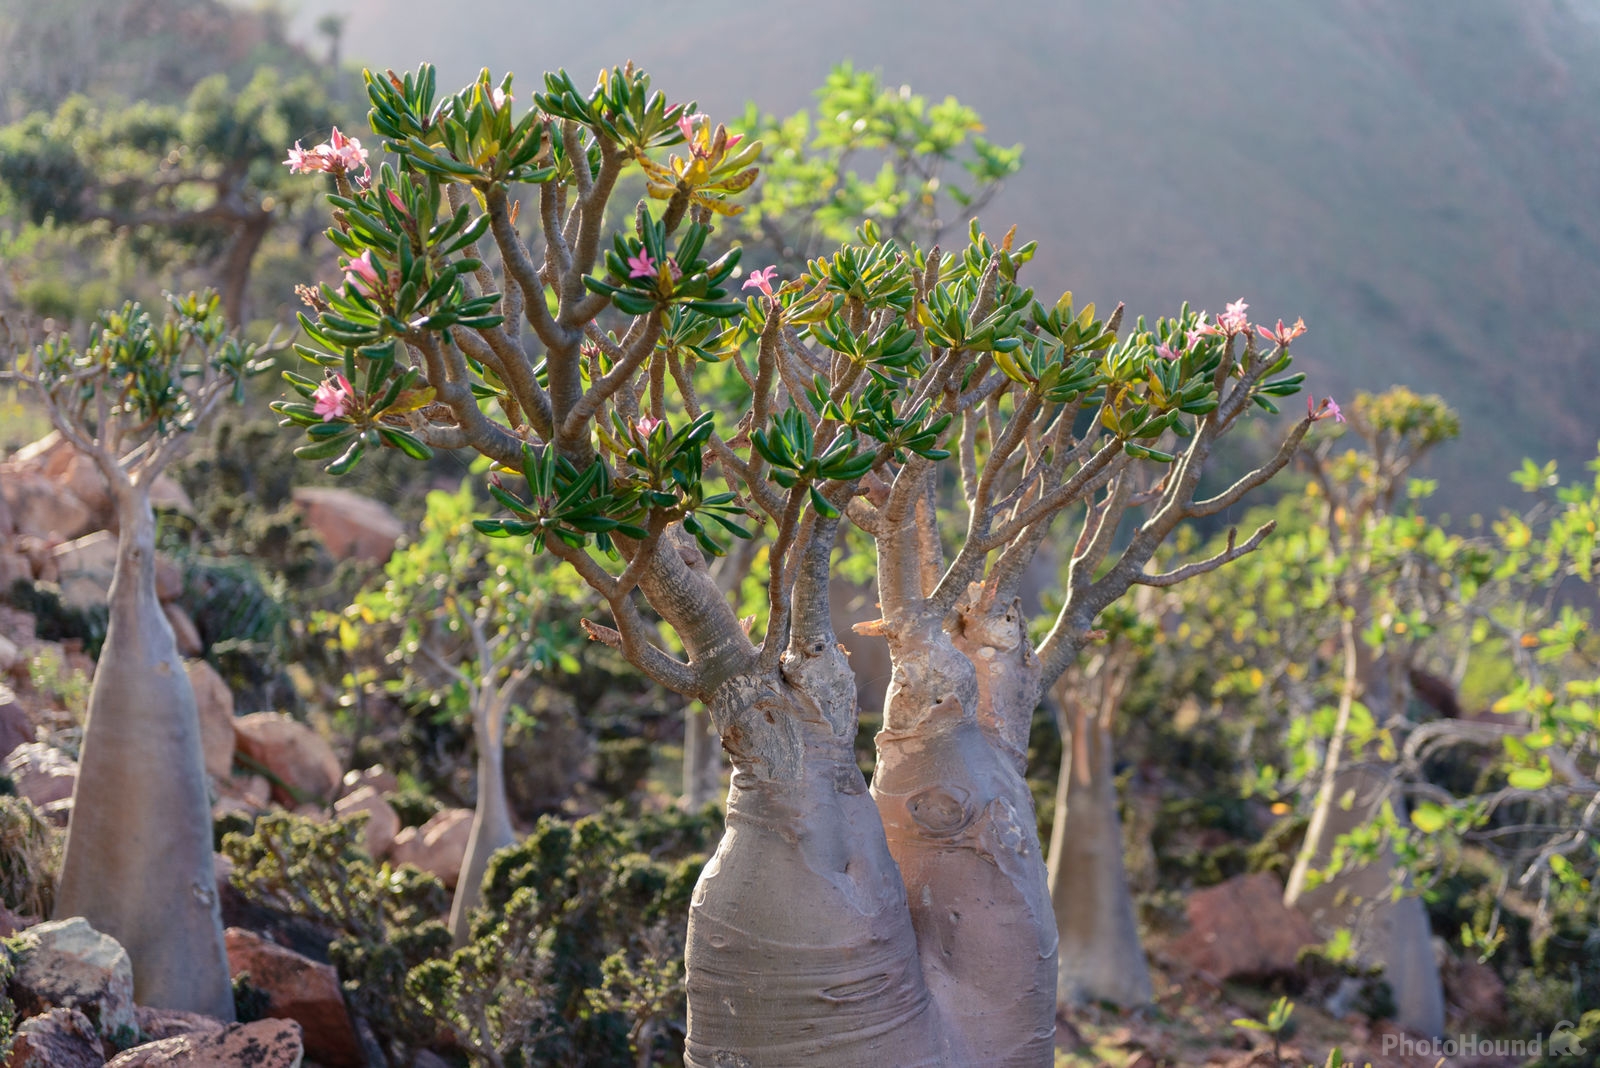 Image of Homhil Plateau, Socotra by Luka Esenko